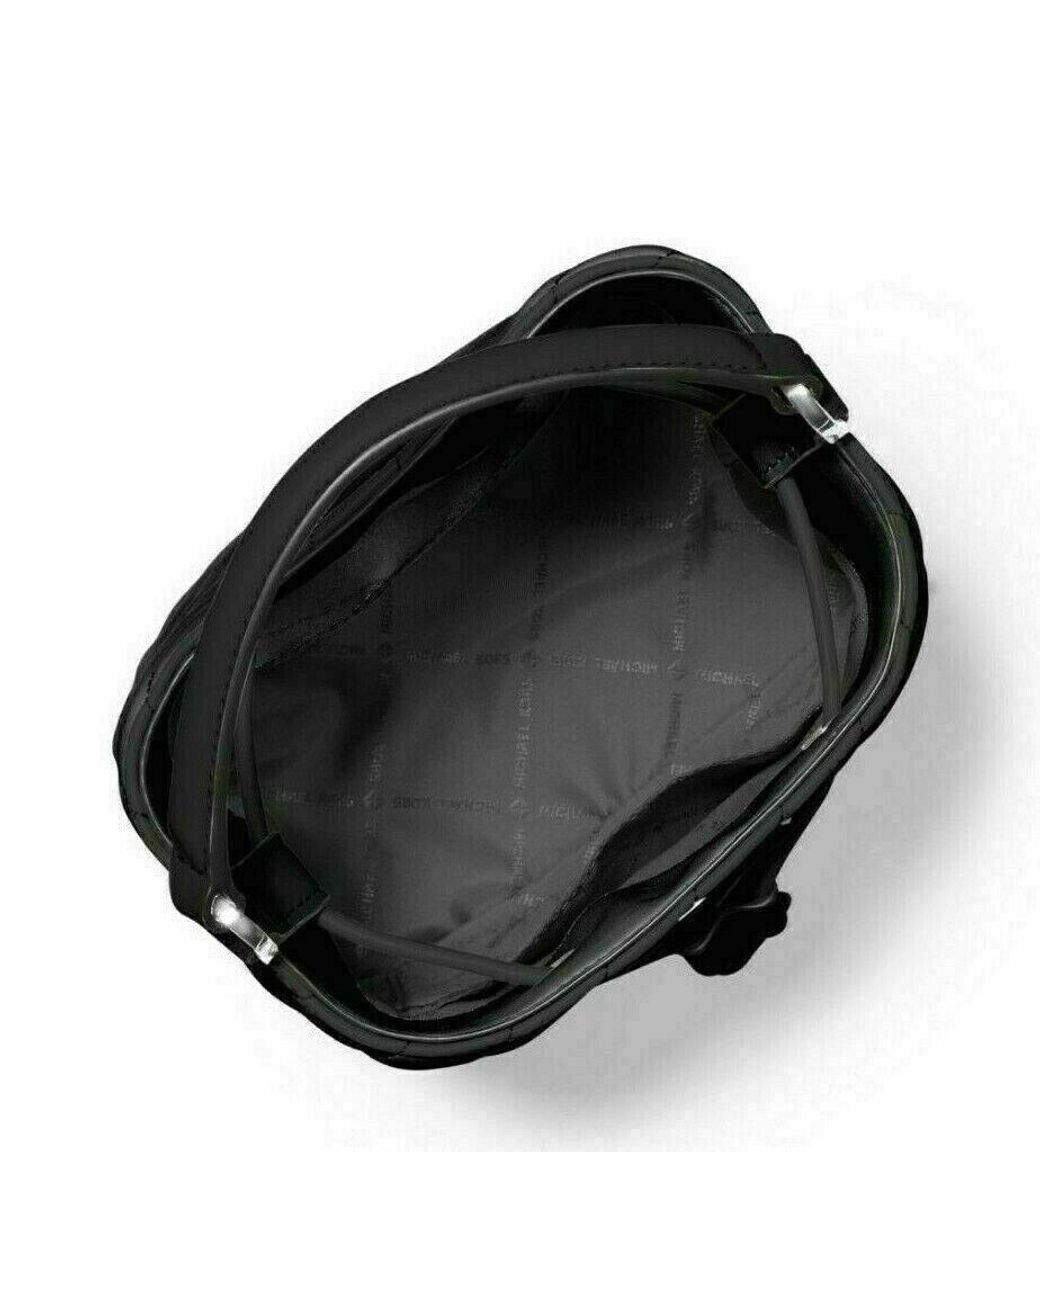 Michael Kors Suri Medium Black White Quilted Leather Bucket Crossbody Purse  Bag